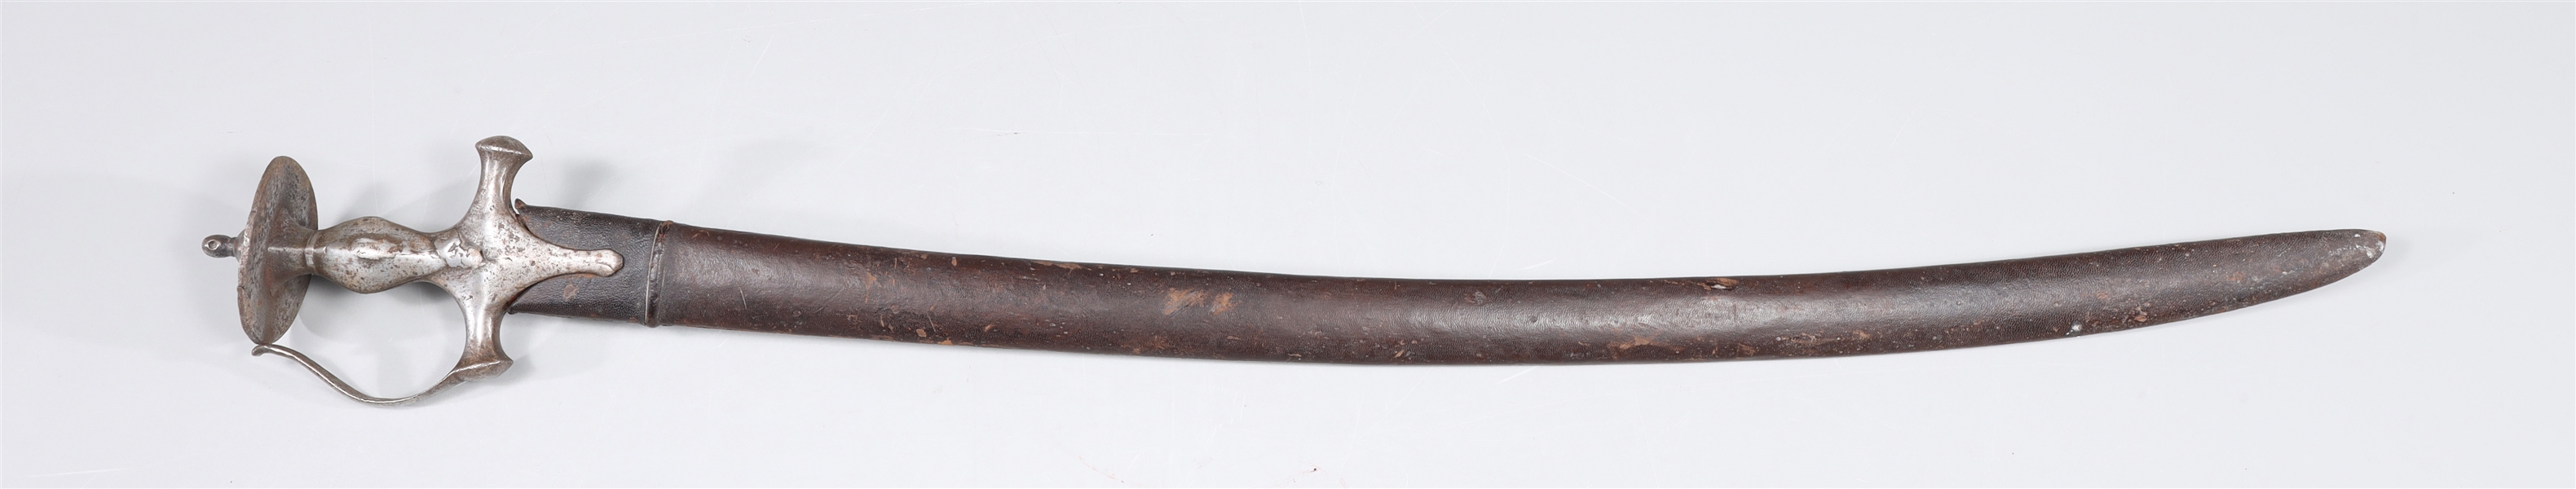 Antique Indo-Persian talwar sword